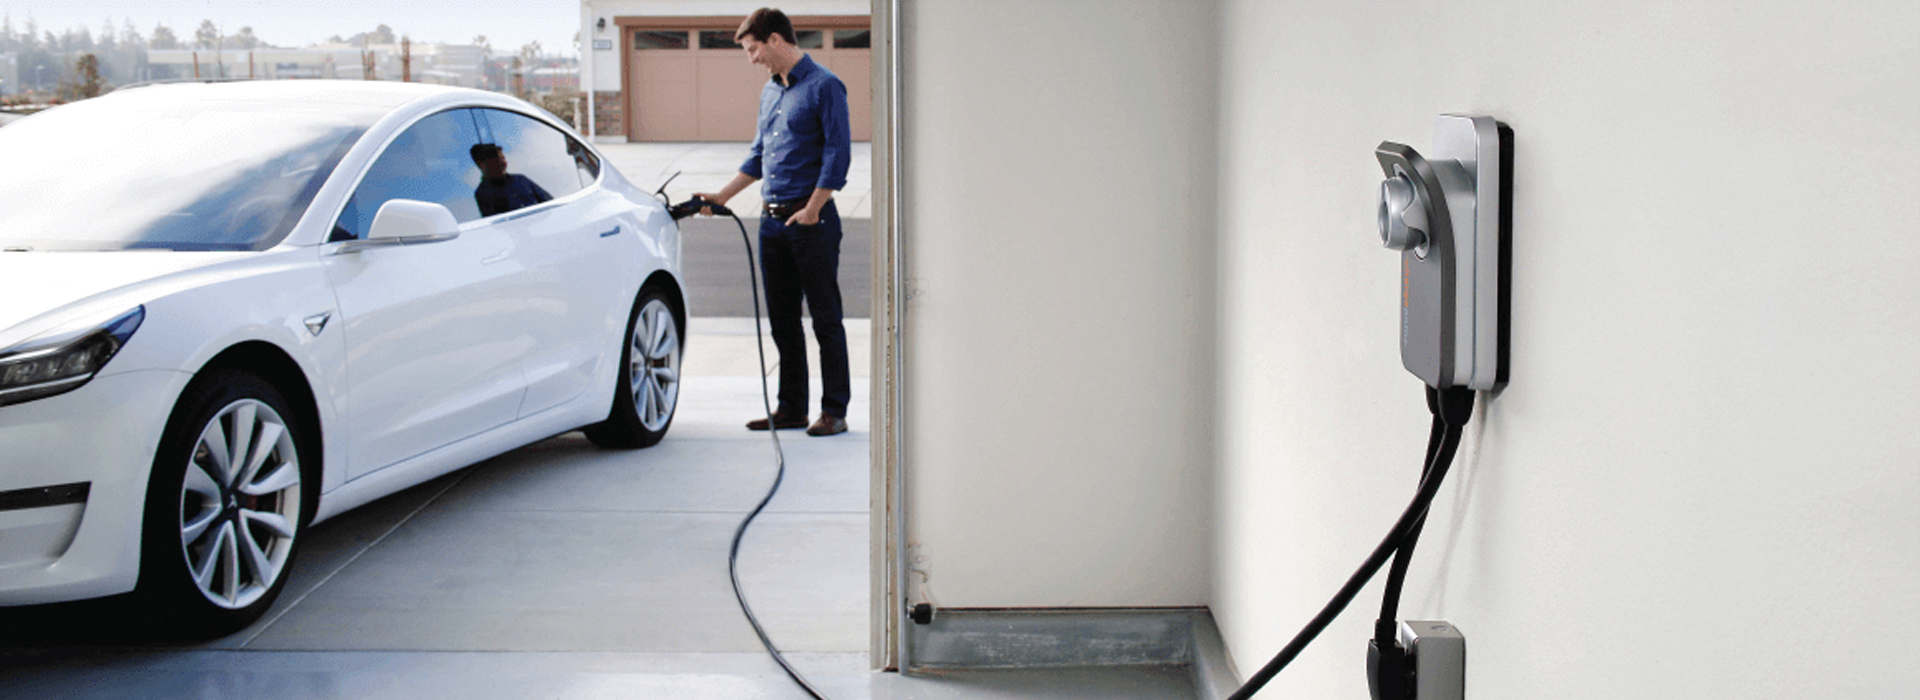 dwp-rebate-for-electric-car-chargers-2022-carrebate